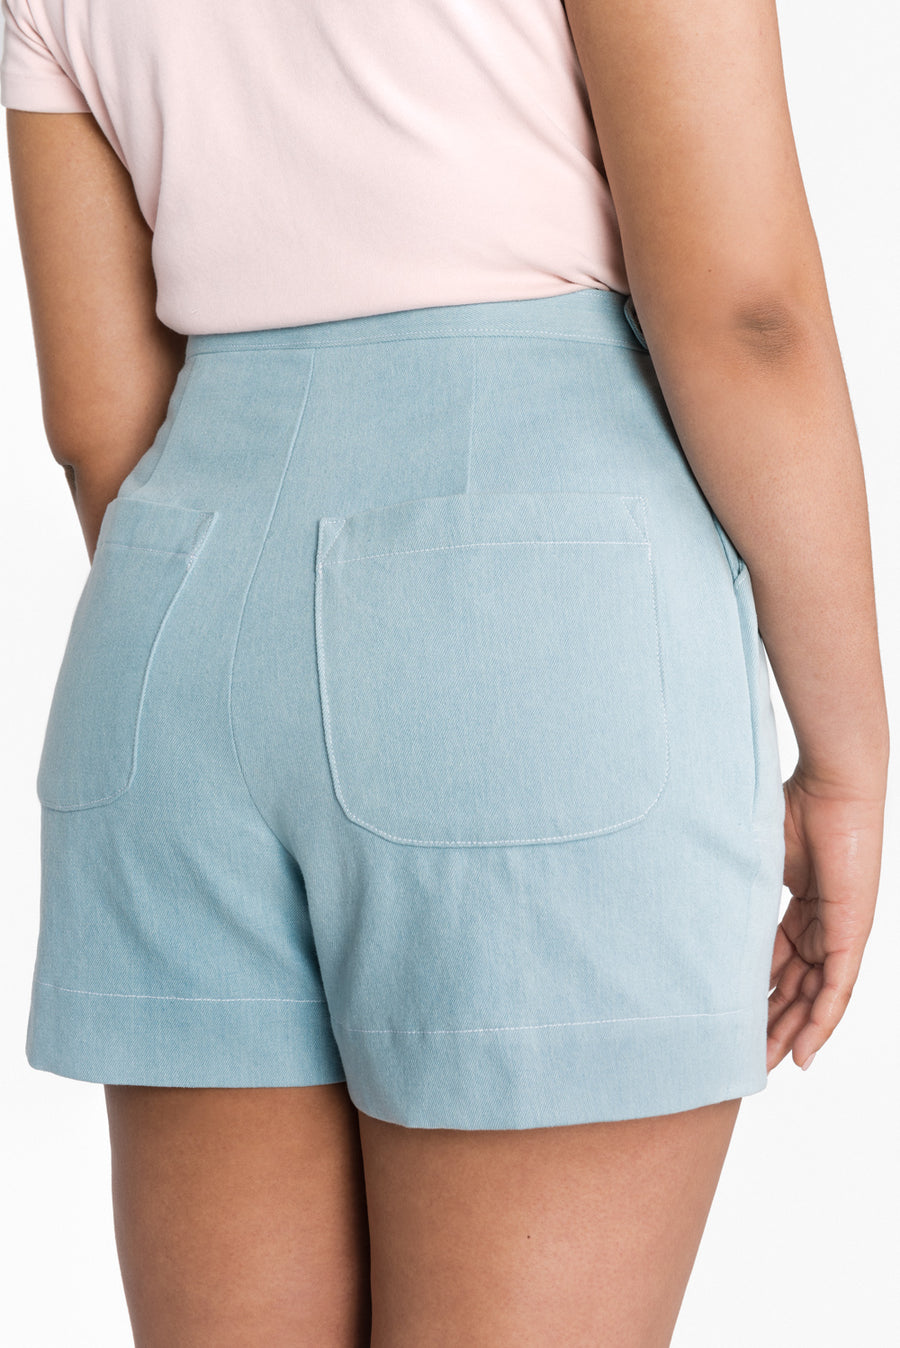 Elastic Waist Denim Overalls Shorts Skirt  Denim overalls shorts, Utility  skirt, Womens skirt